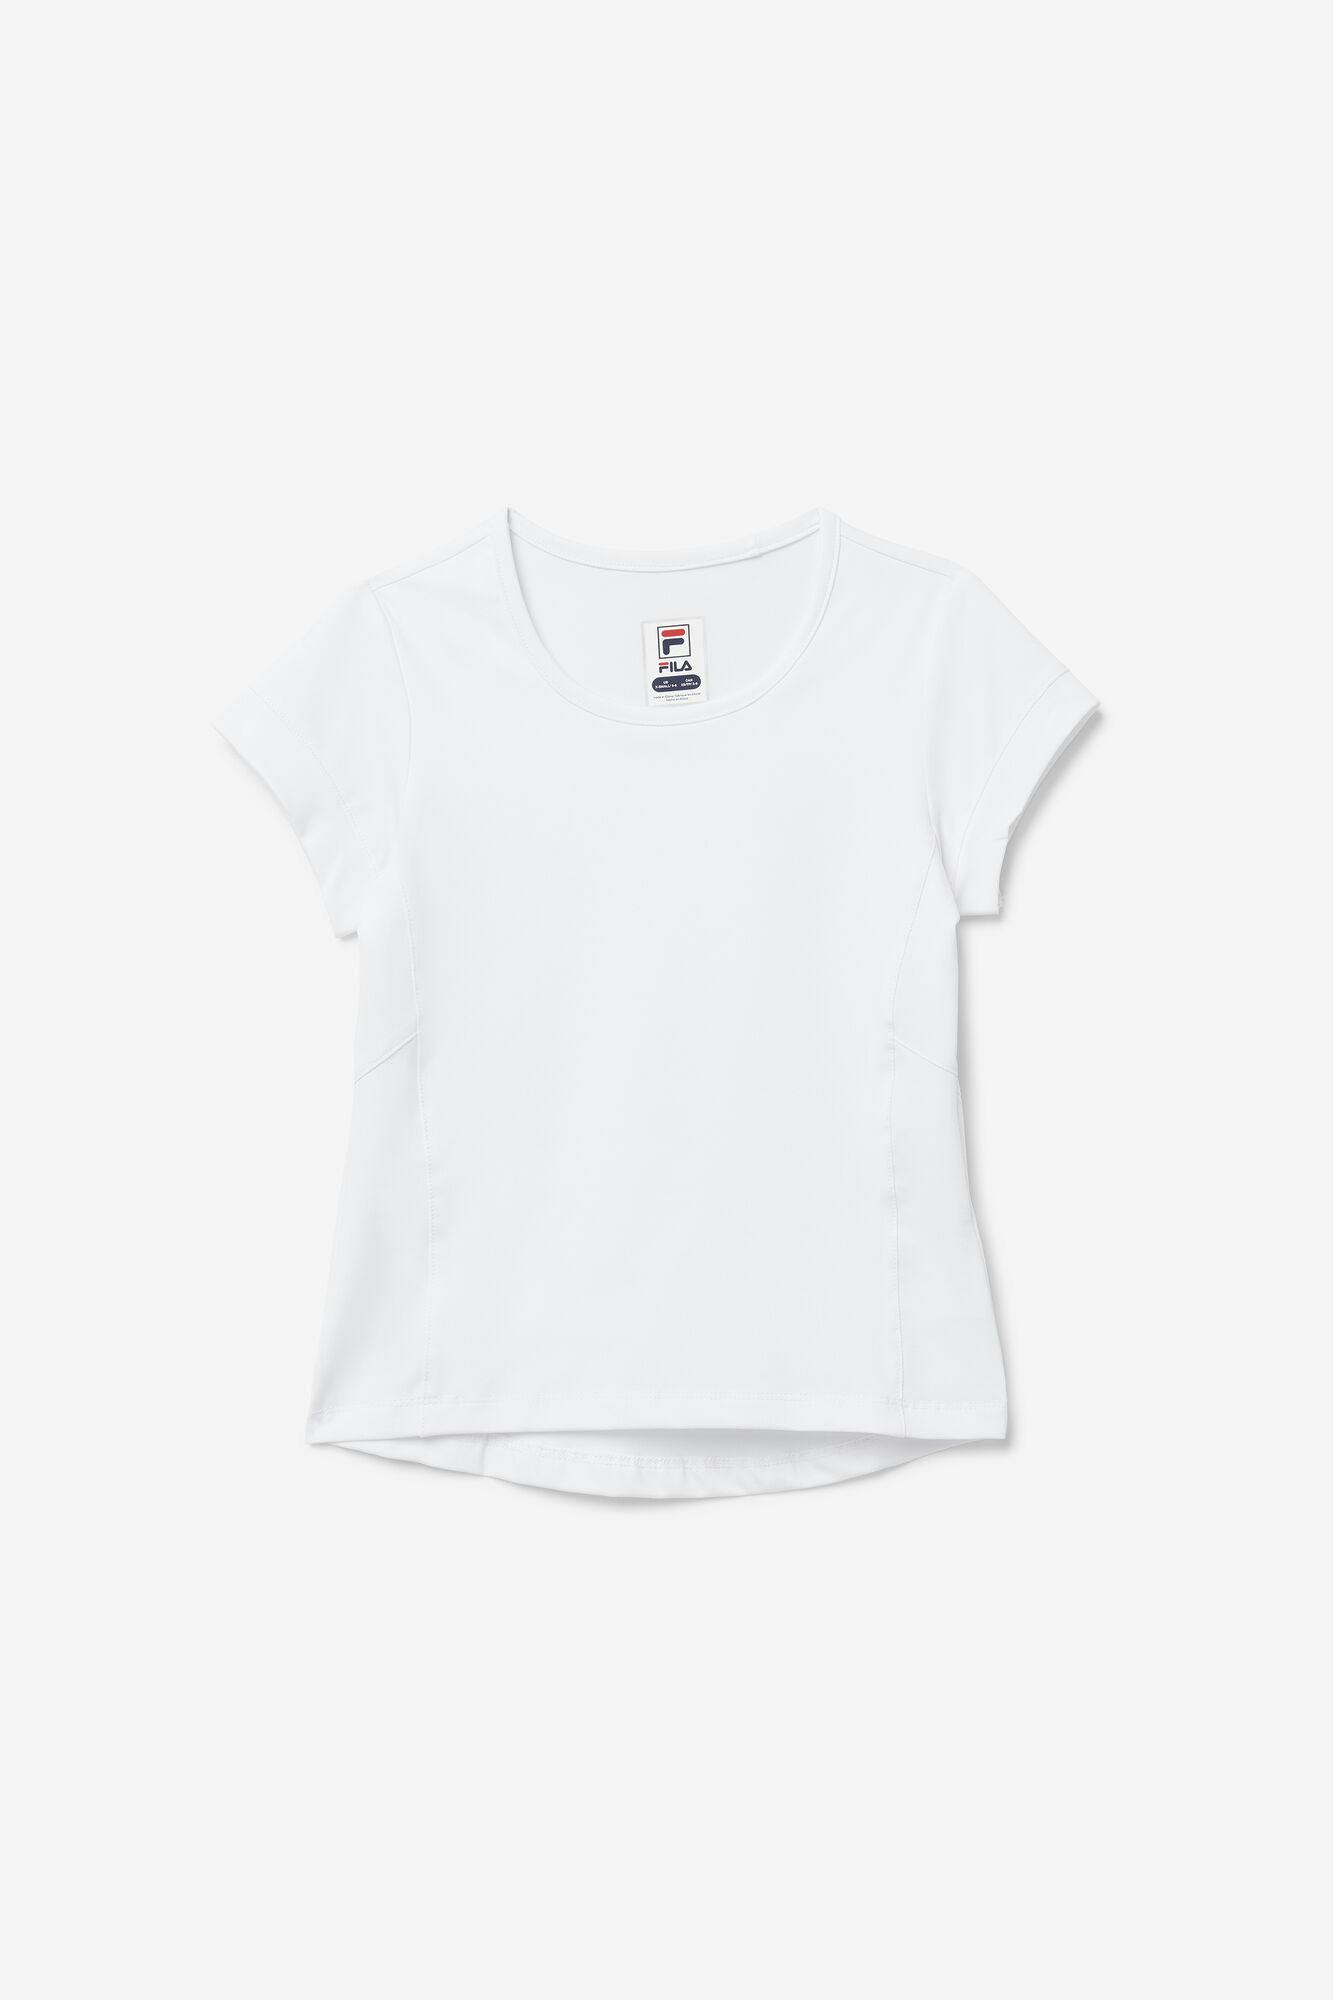 Fila Girl's Core Short Sleeve Tennis Shirt